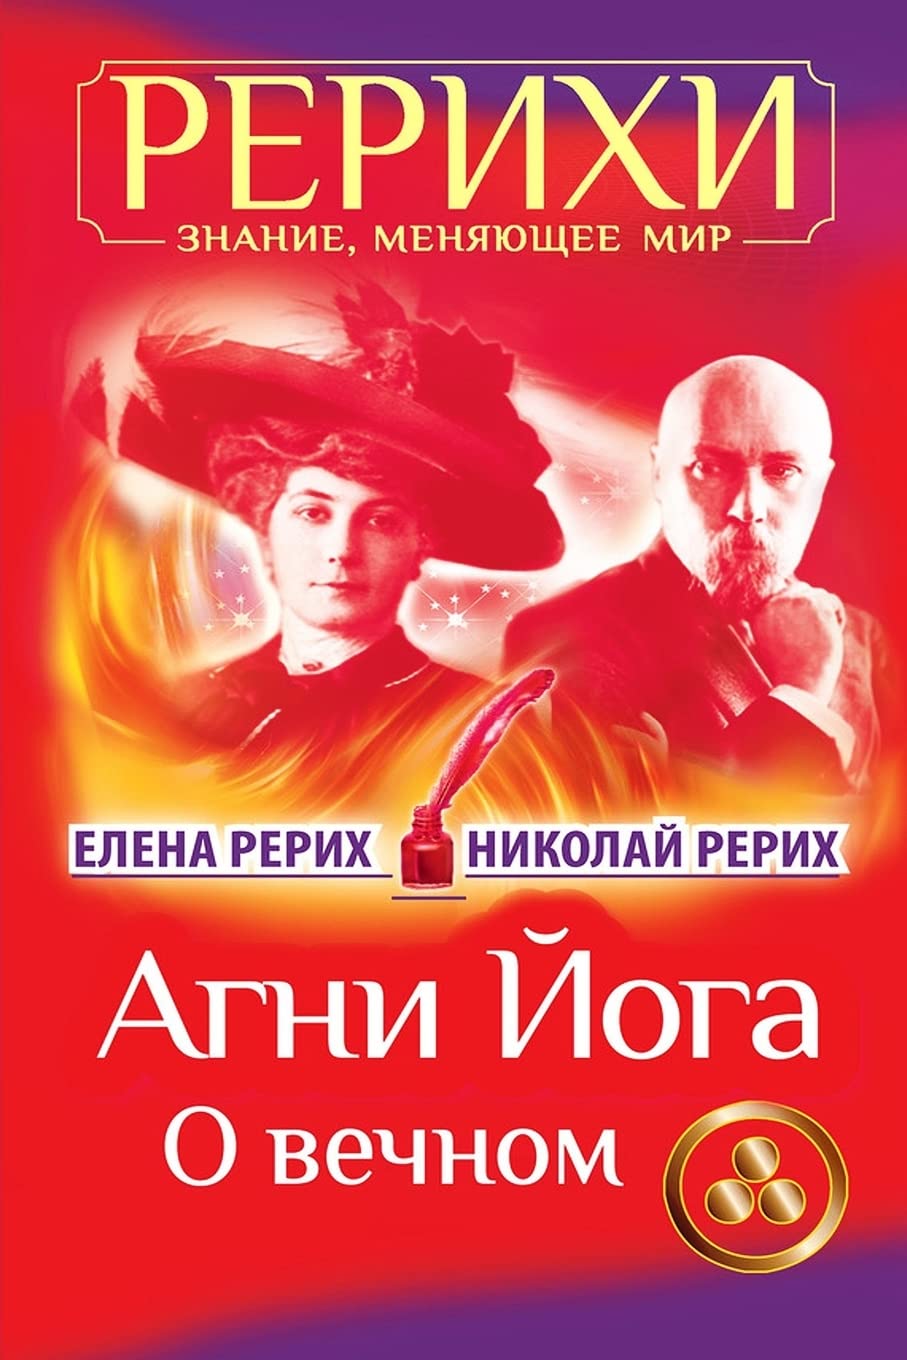 AGNI Joga. O Vechnom (Russian Edition)